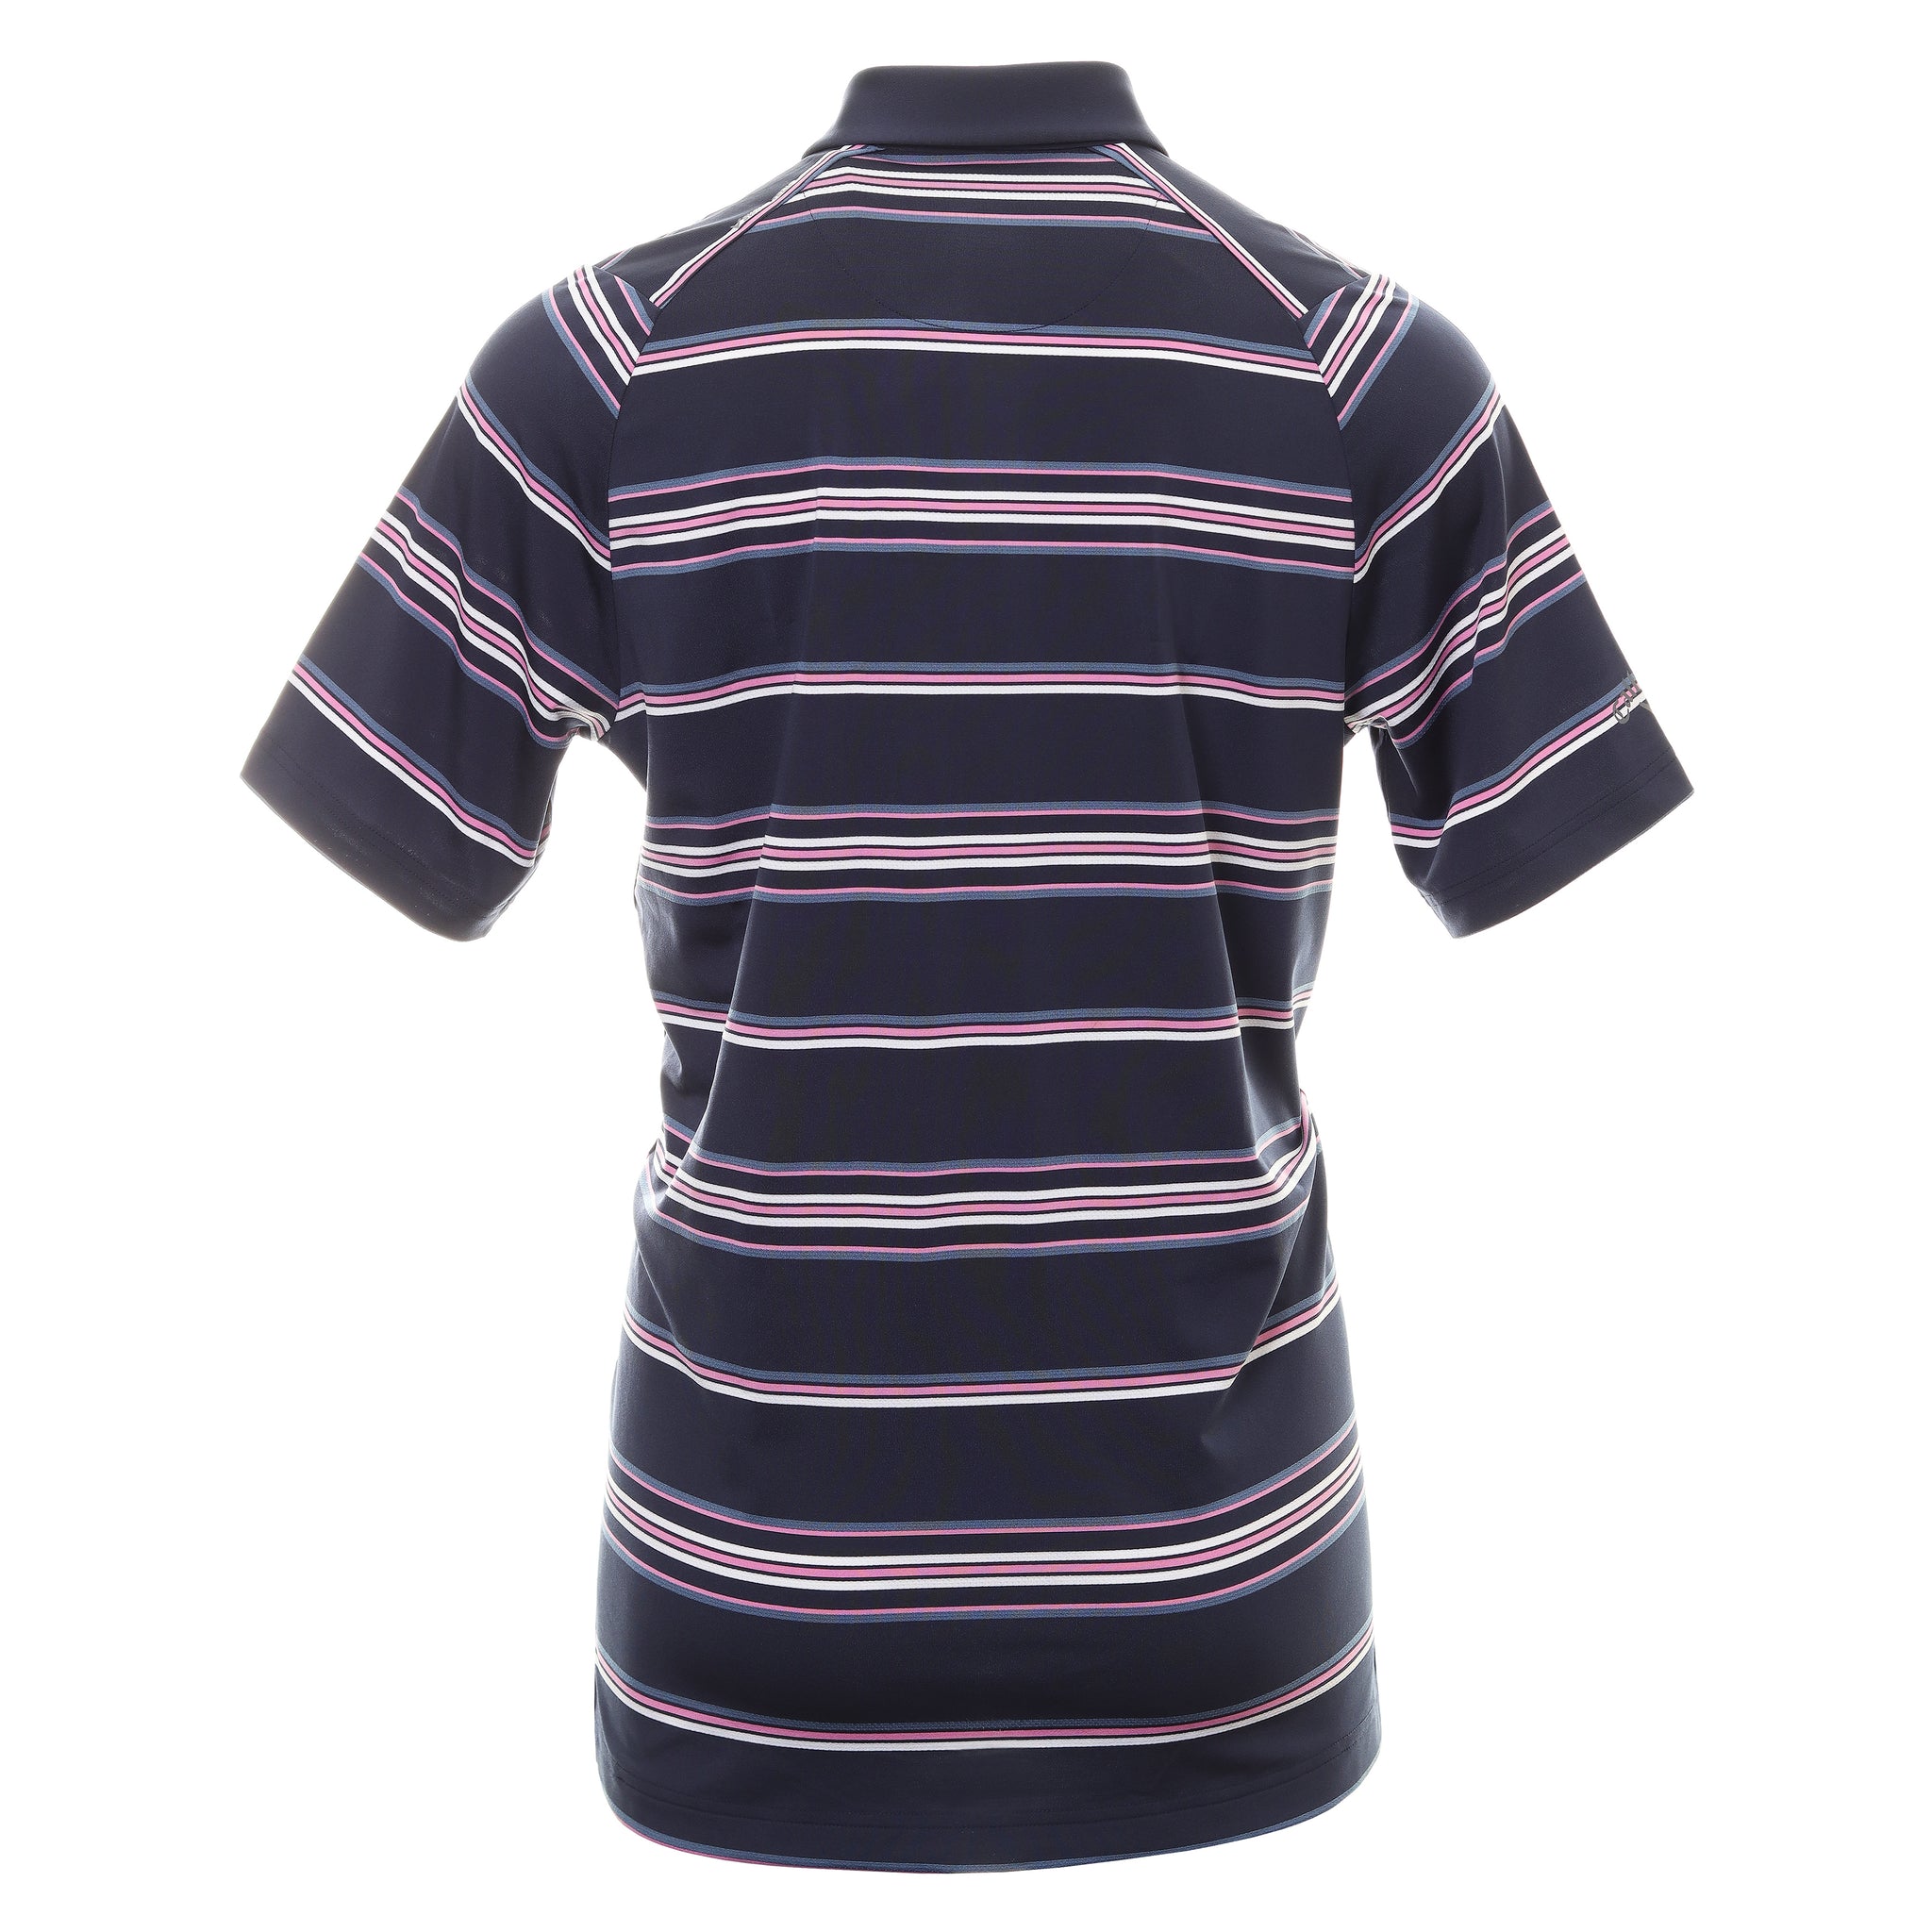 callaway-golf-ventilated-stripe-shirt-cgksc0a7-peacoat-410